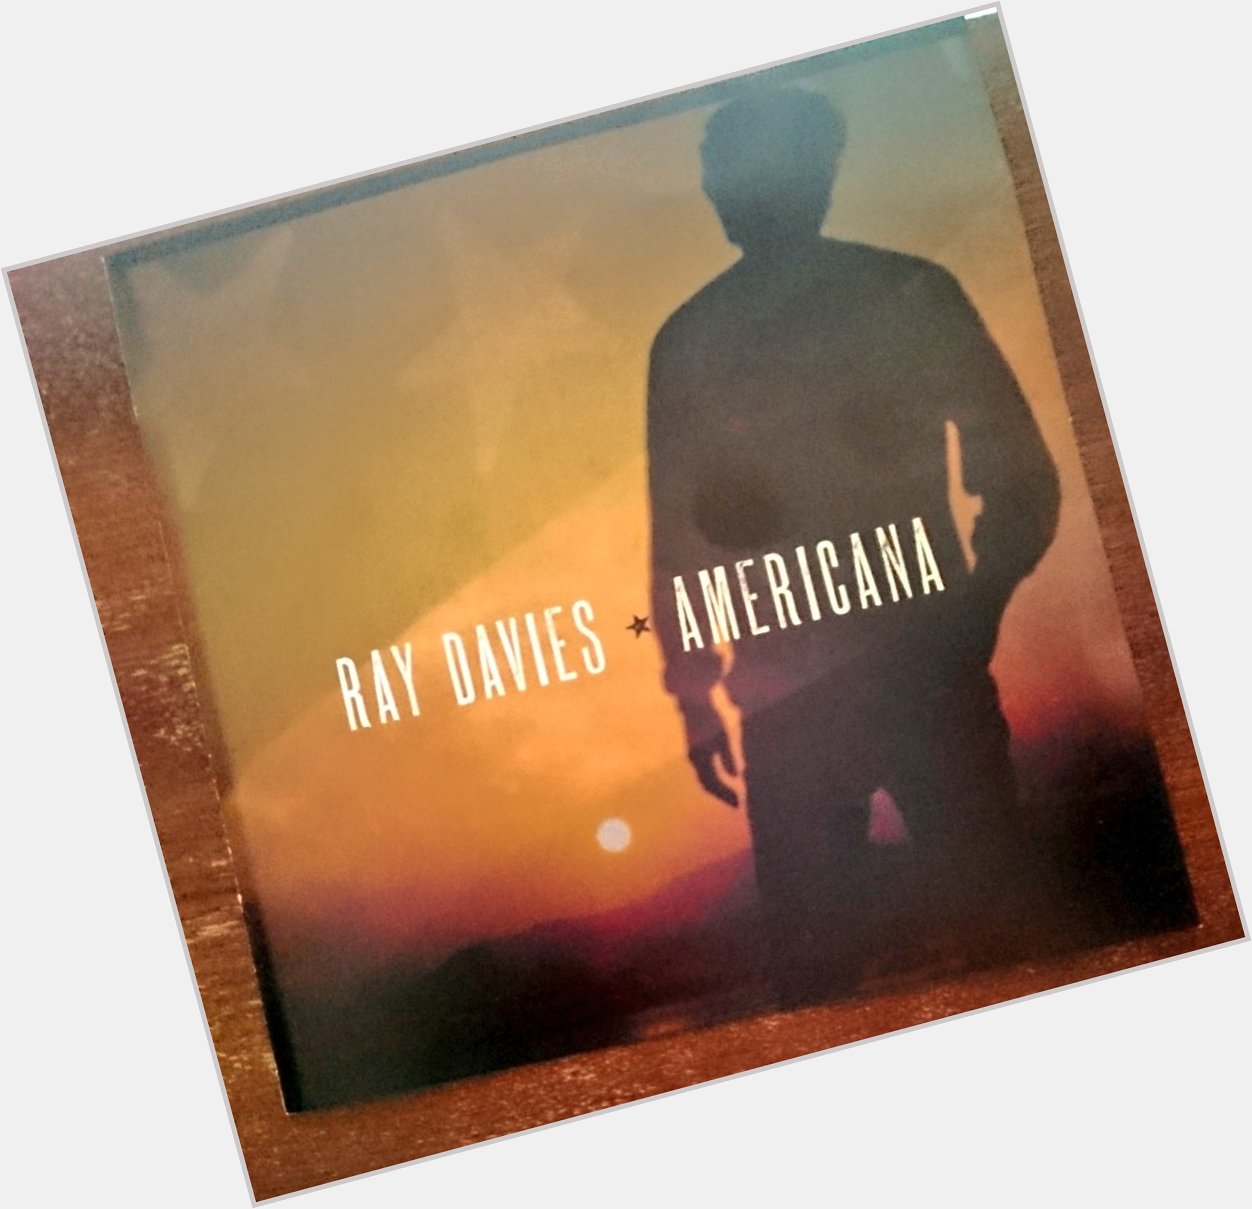 Happy Birthday Sir Ray Davies Americana is such a great album! 